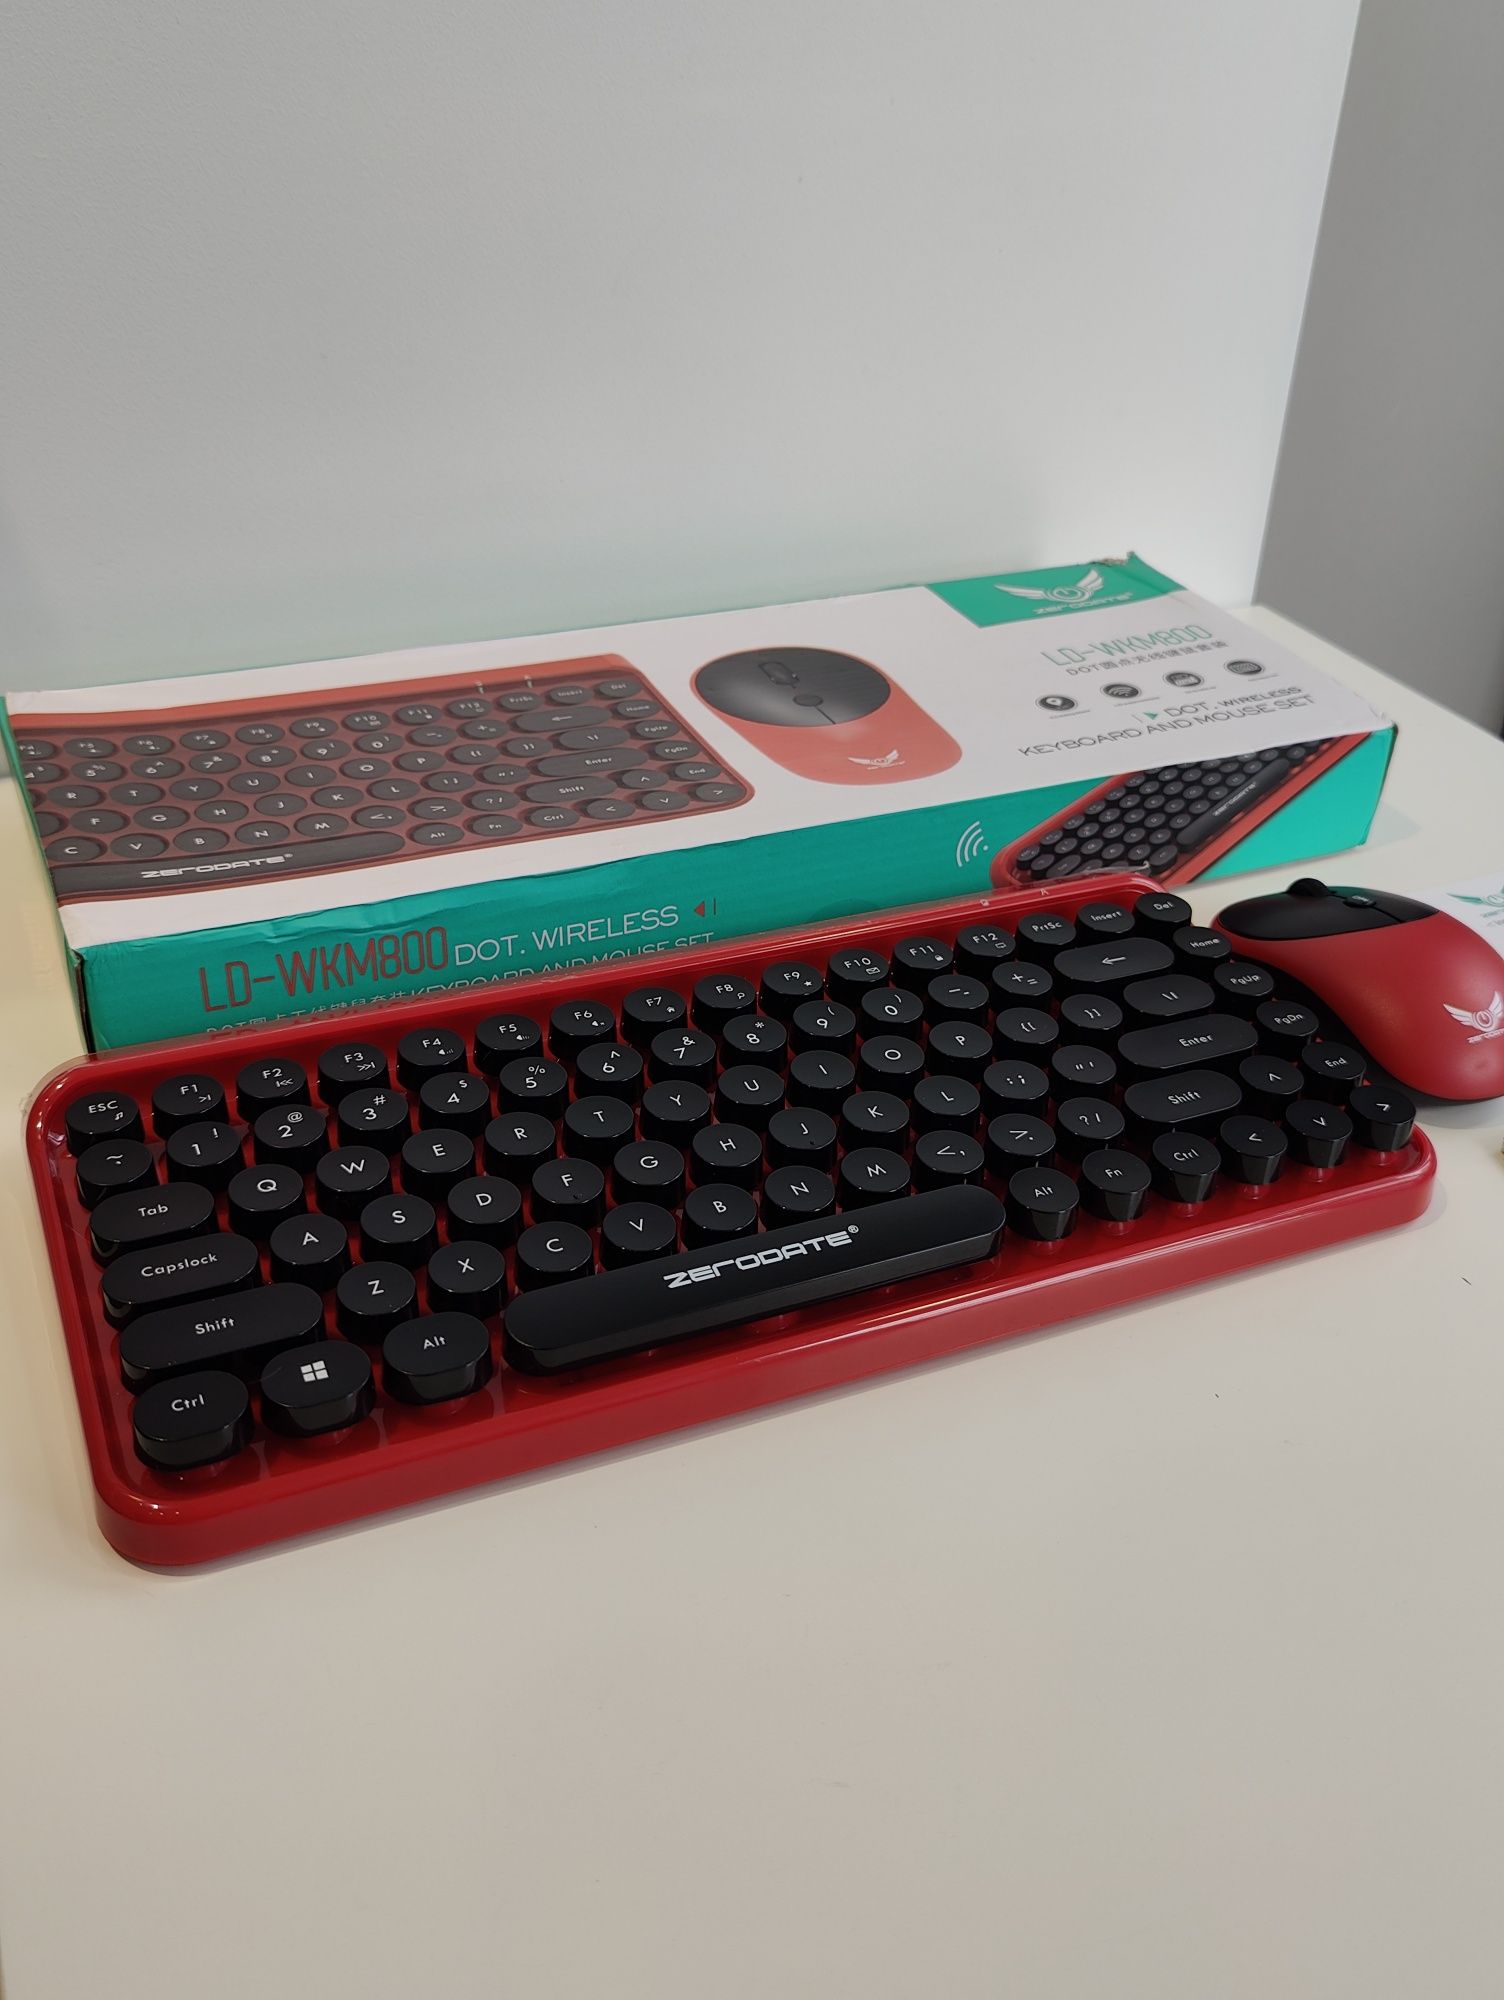 Комплект бездротова клавіатура + мишка ZERODATE LD-WKM800 2.4Ghz